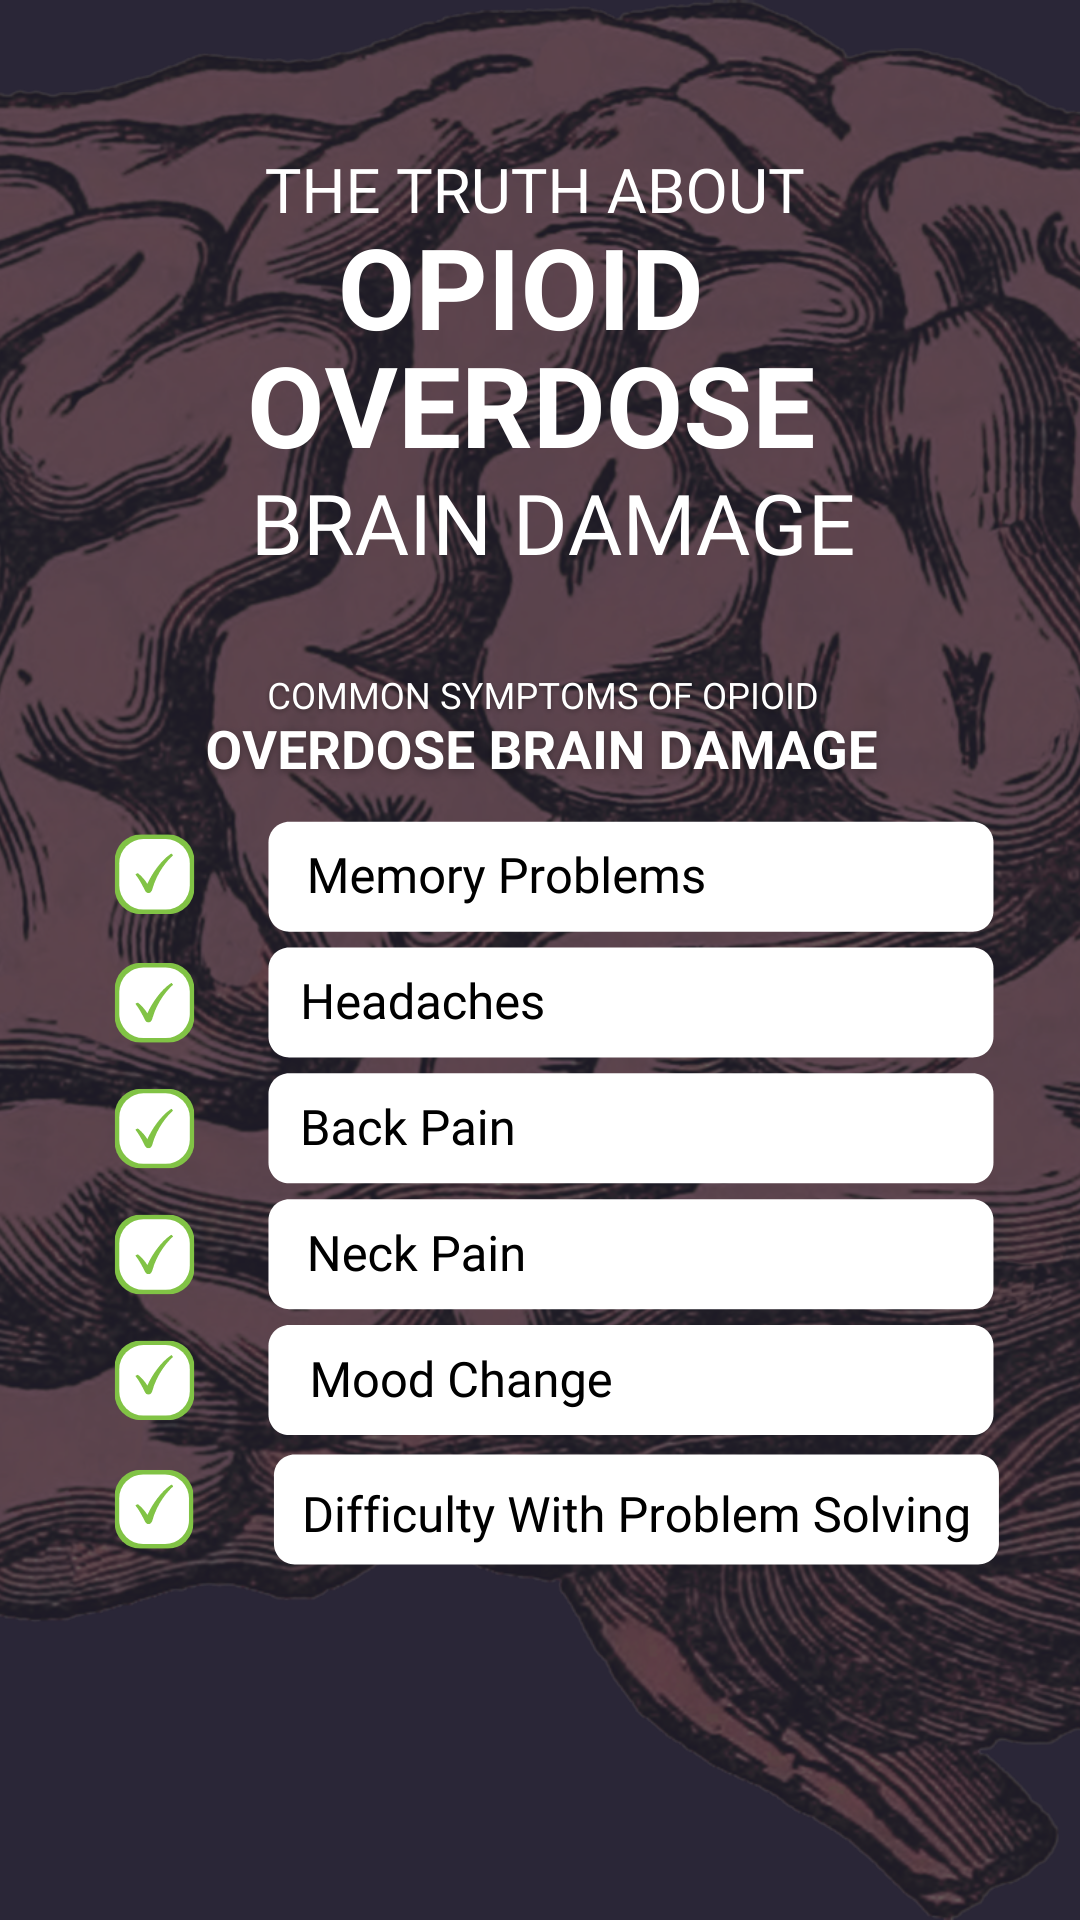 common symptoms of opioid overdose brain damage